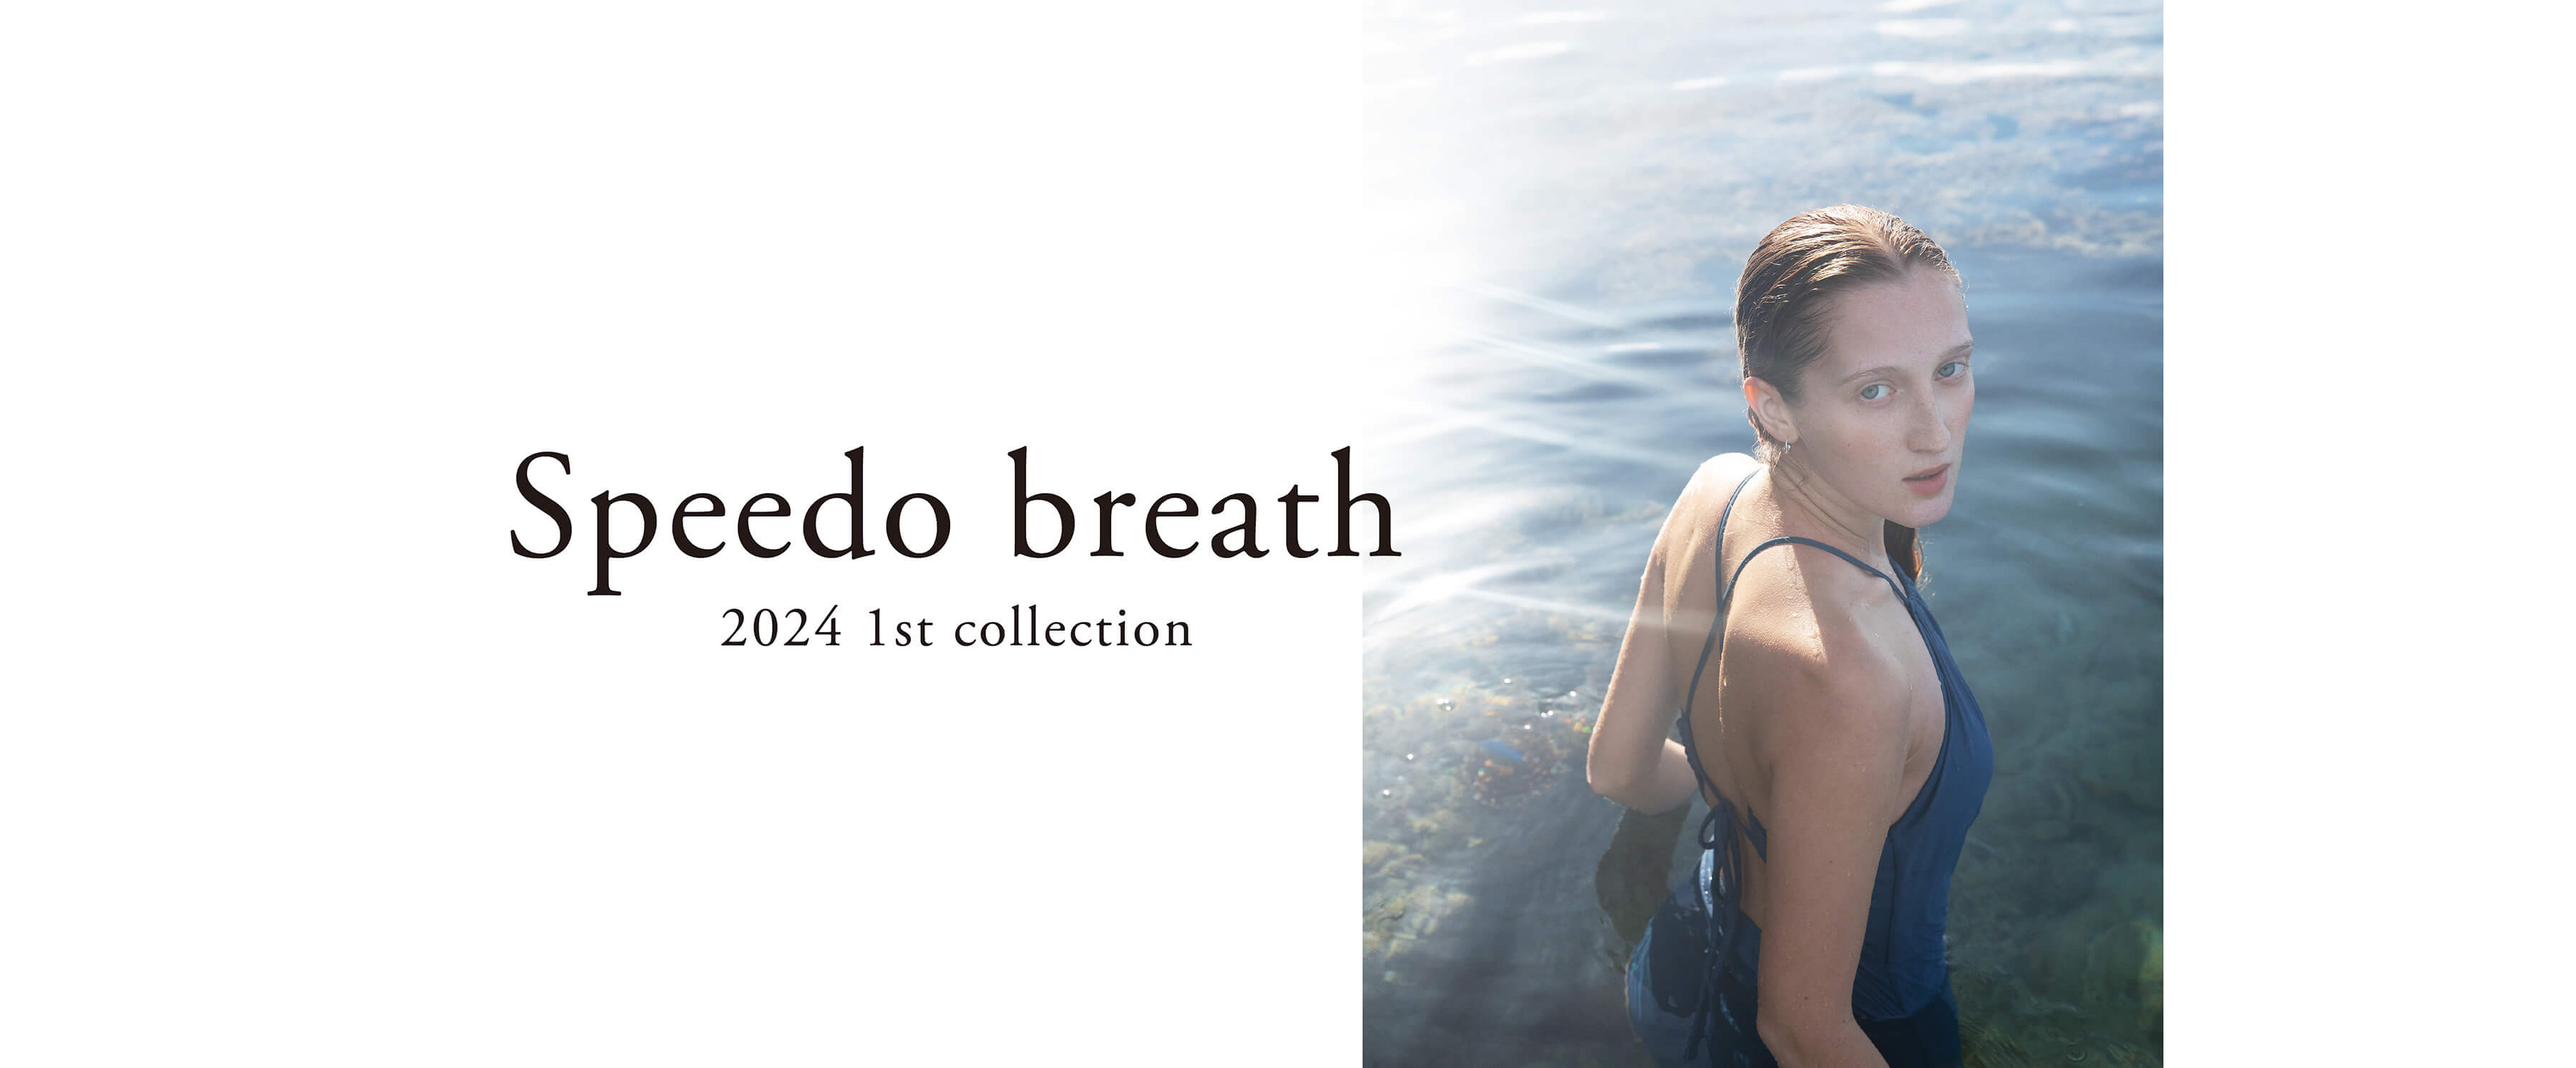 Speedo breath 2023 2nd collection